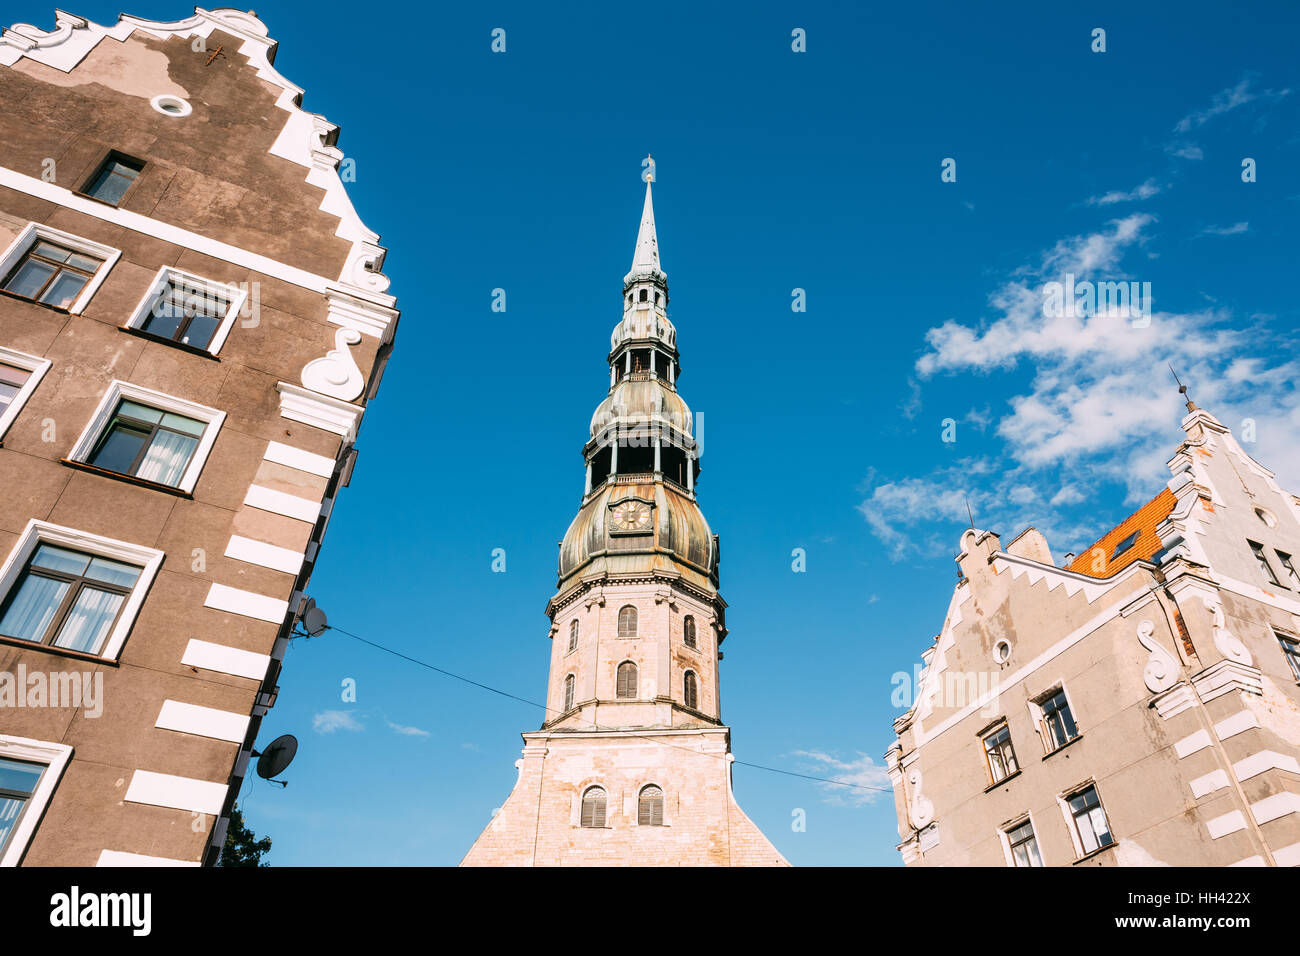 Riga, Letonia. Vista inferior de la Fleche con el reloj de la Iglesia de San Pedro, antigua torre alta, famoso entre dos edificios antiguos, cielo azul con W Foto de stock